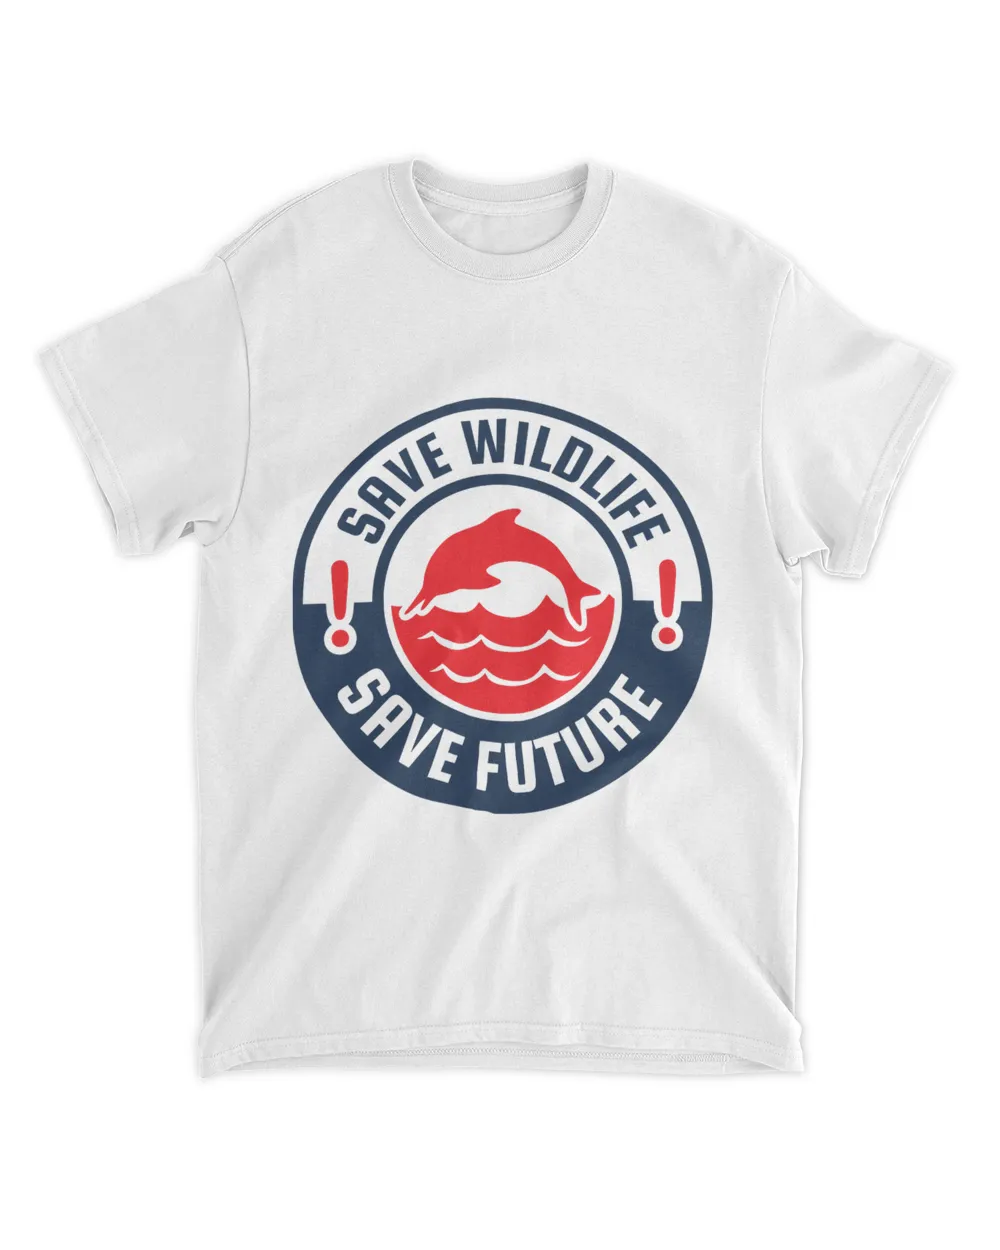 Save Wildlife Save Future (Earth Day Slogan T-Shirt)